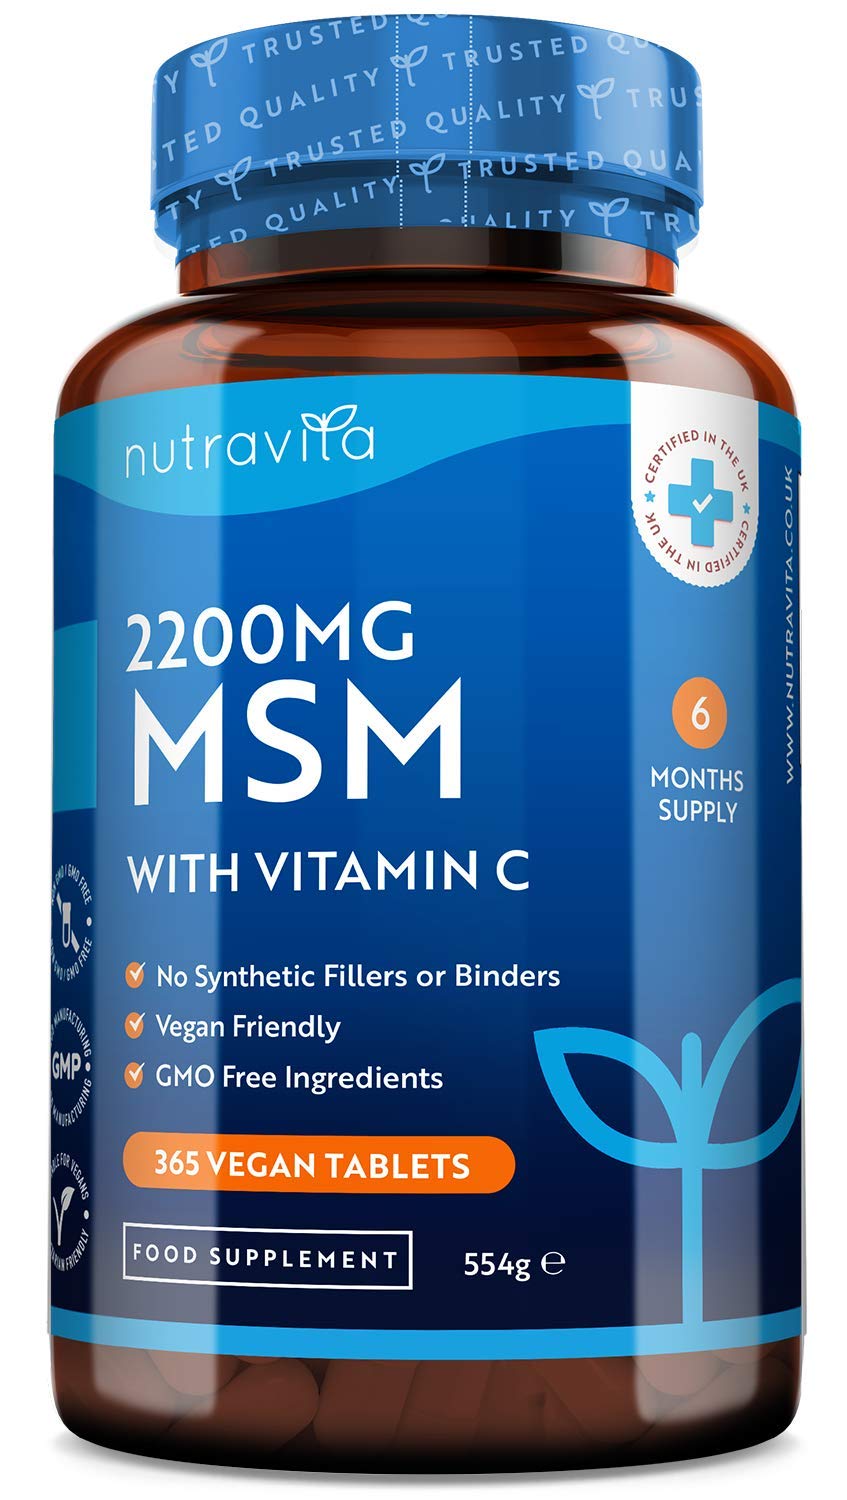 [Australia] - MSM 2200mg Tablets – 365 Vegan Tablets – Methylsulfonylmethane with 80mg Vitamin C – 6 Month Supply - Made in The UK by Nutravita 